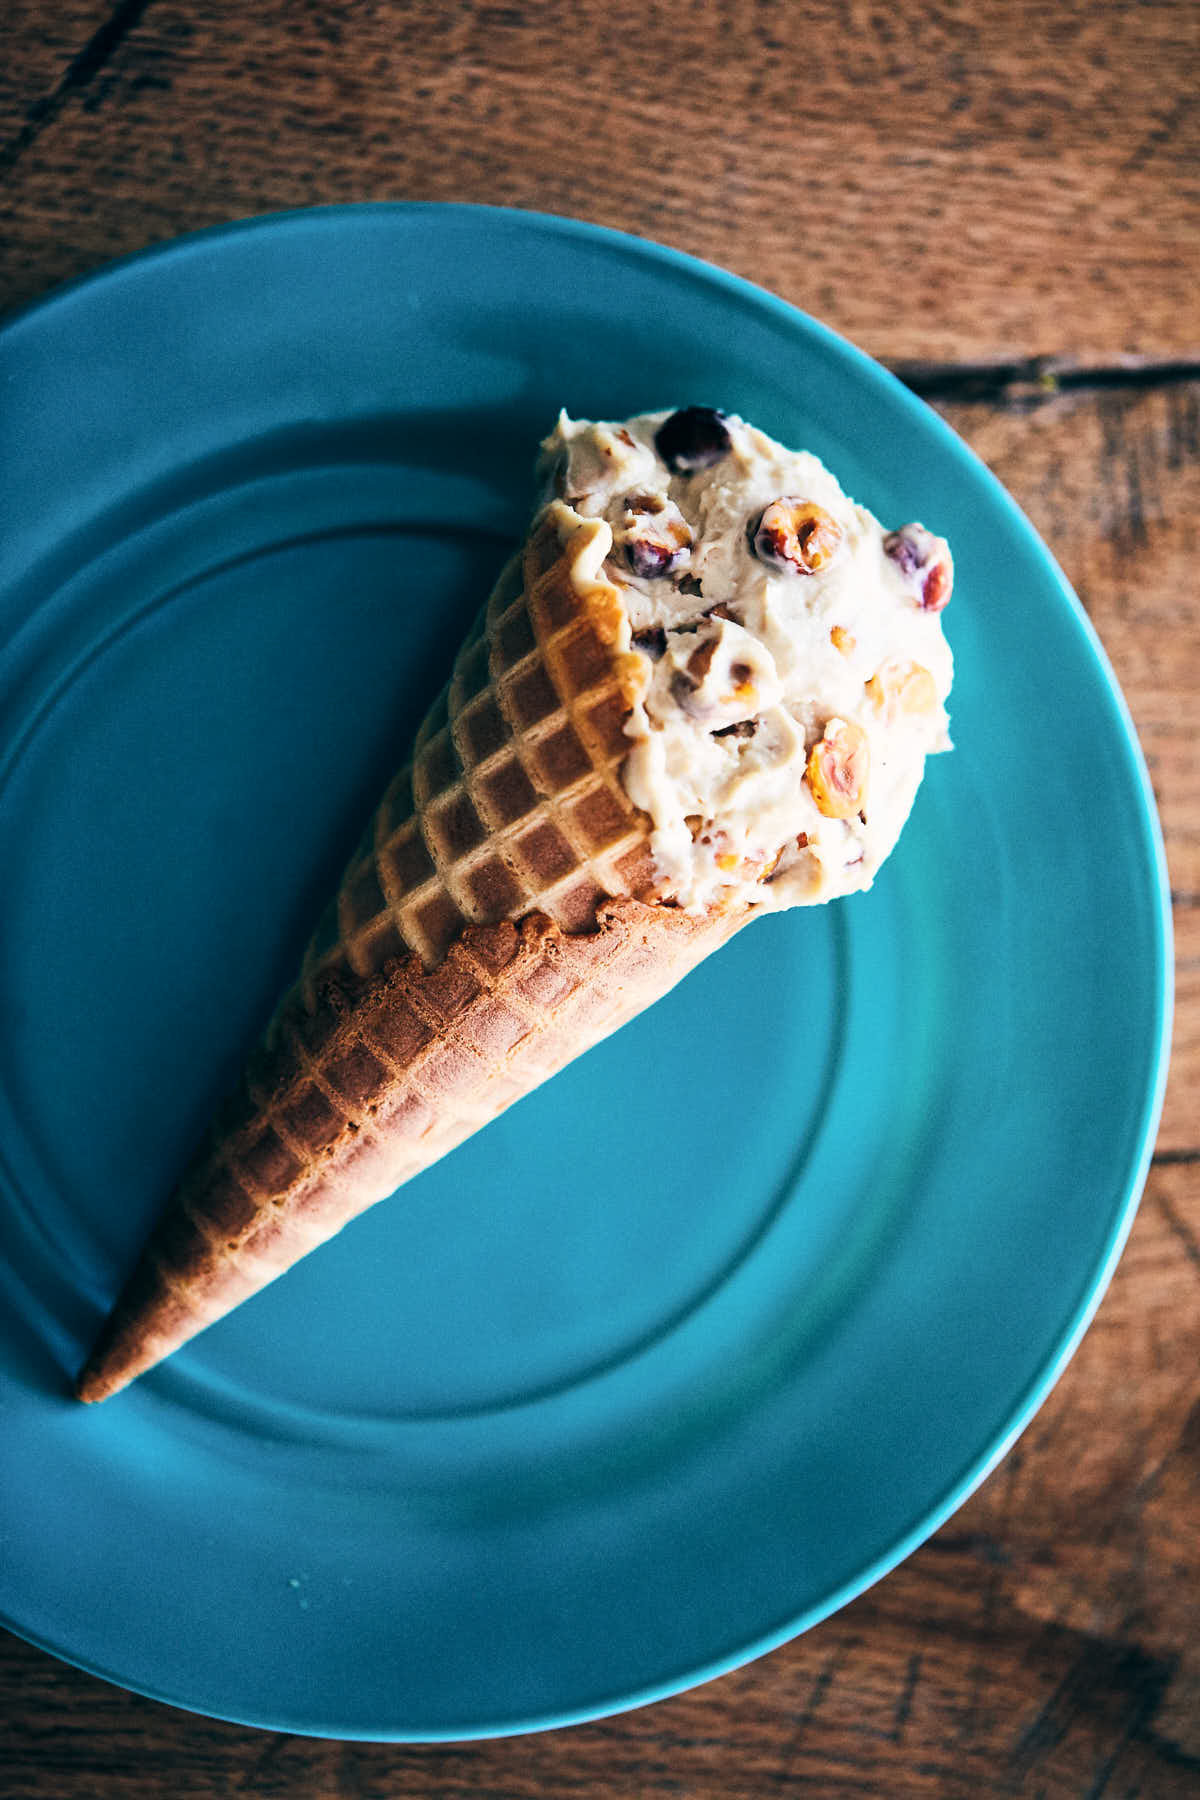 Whiskey hazelnut ice cream cone on a blue plate